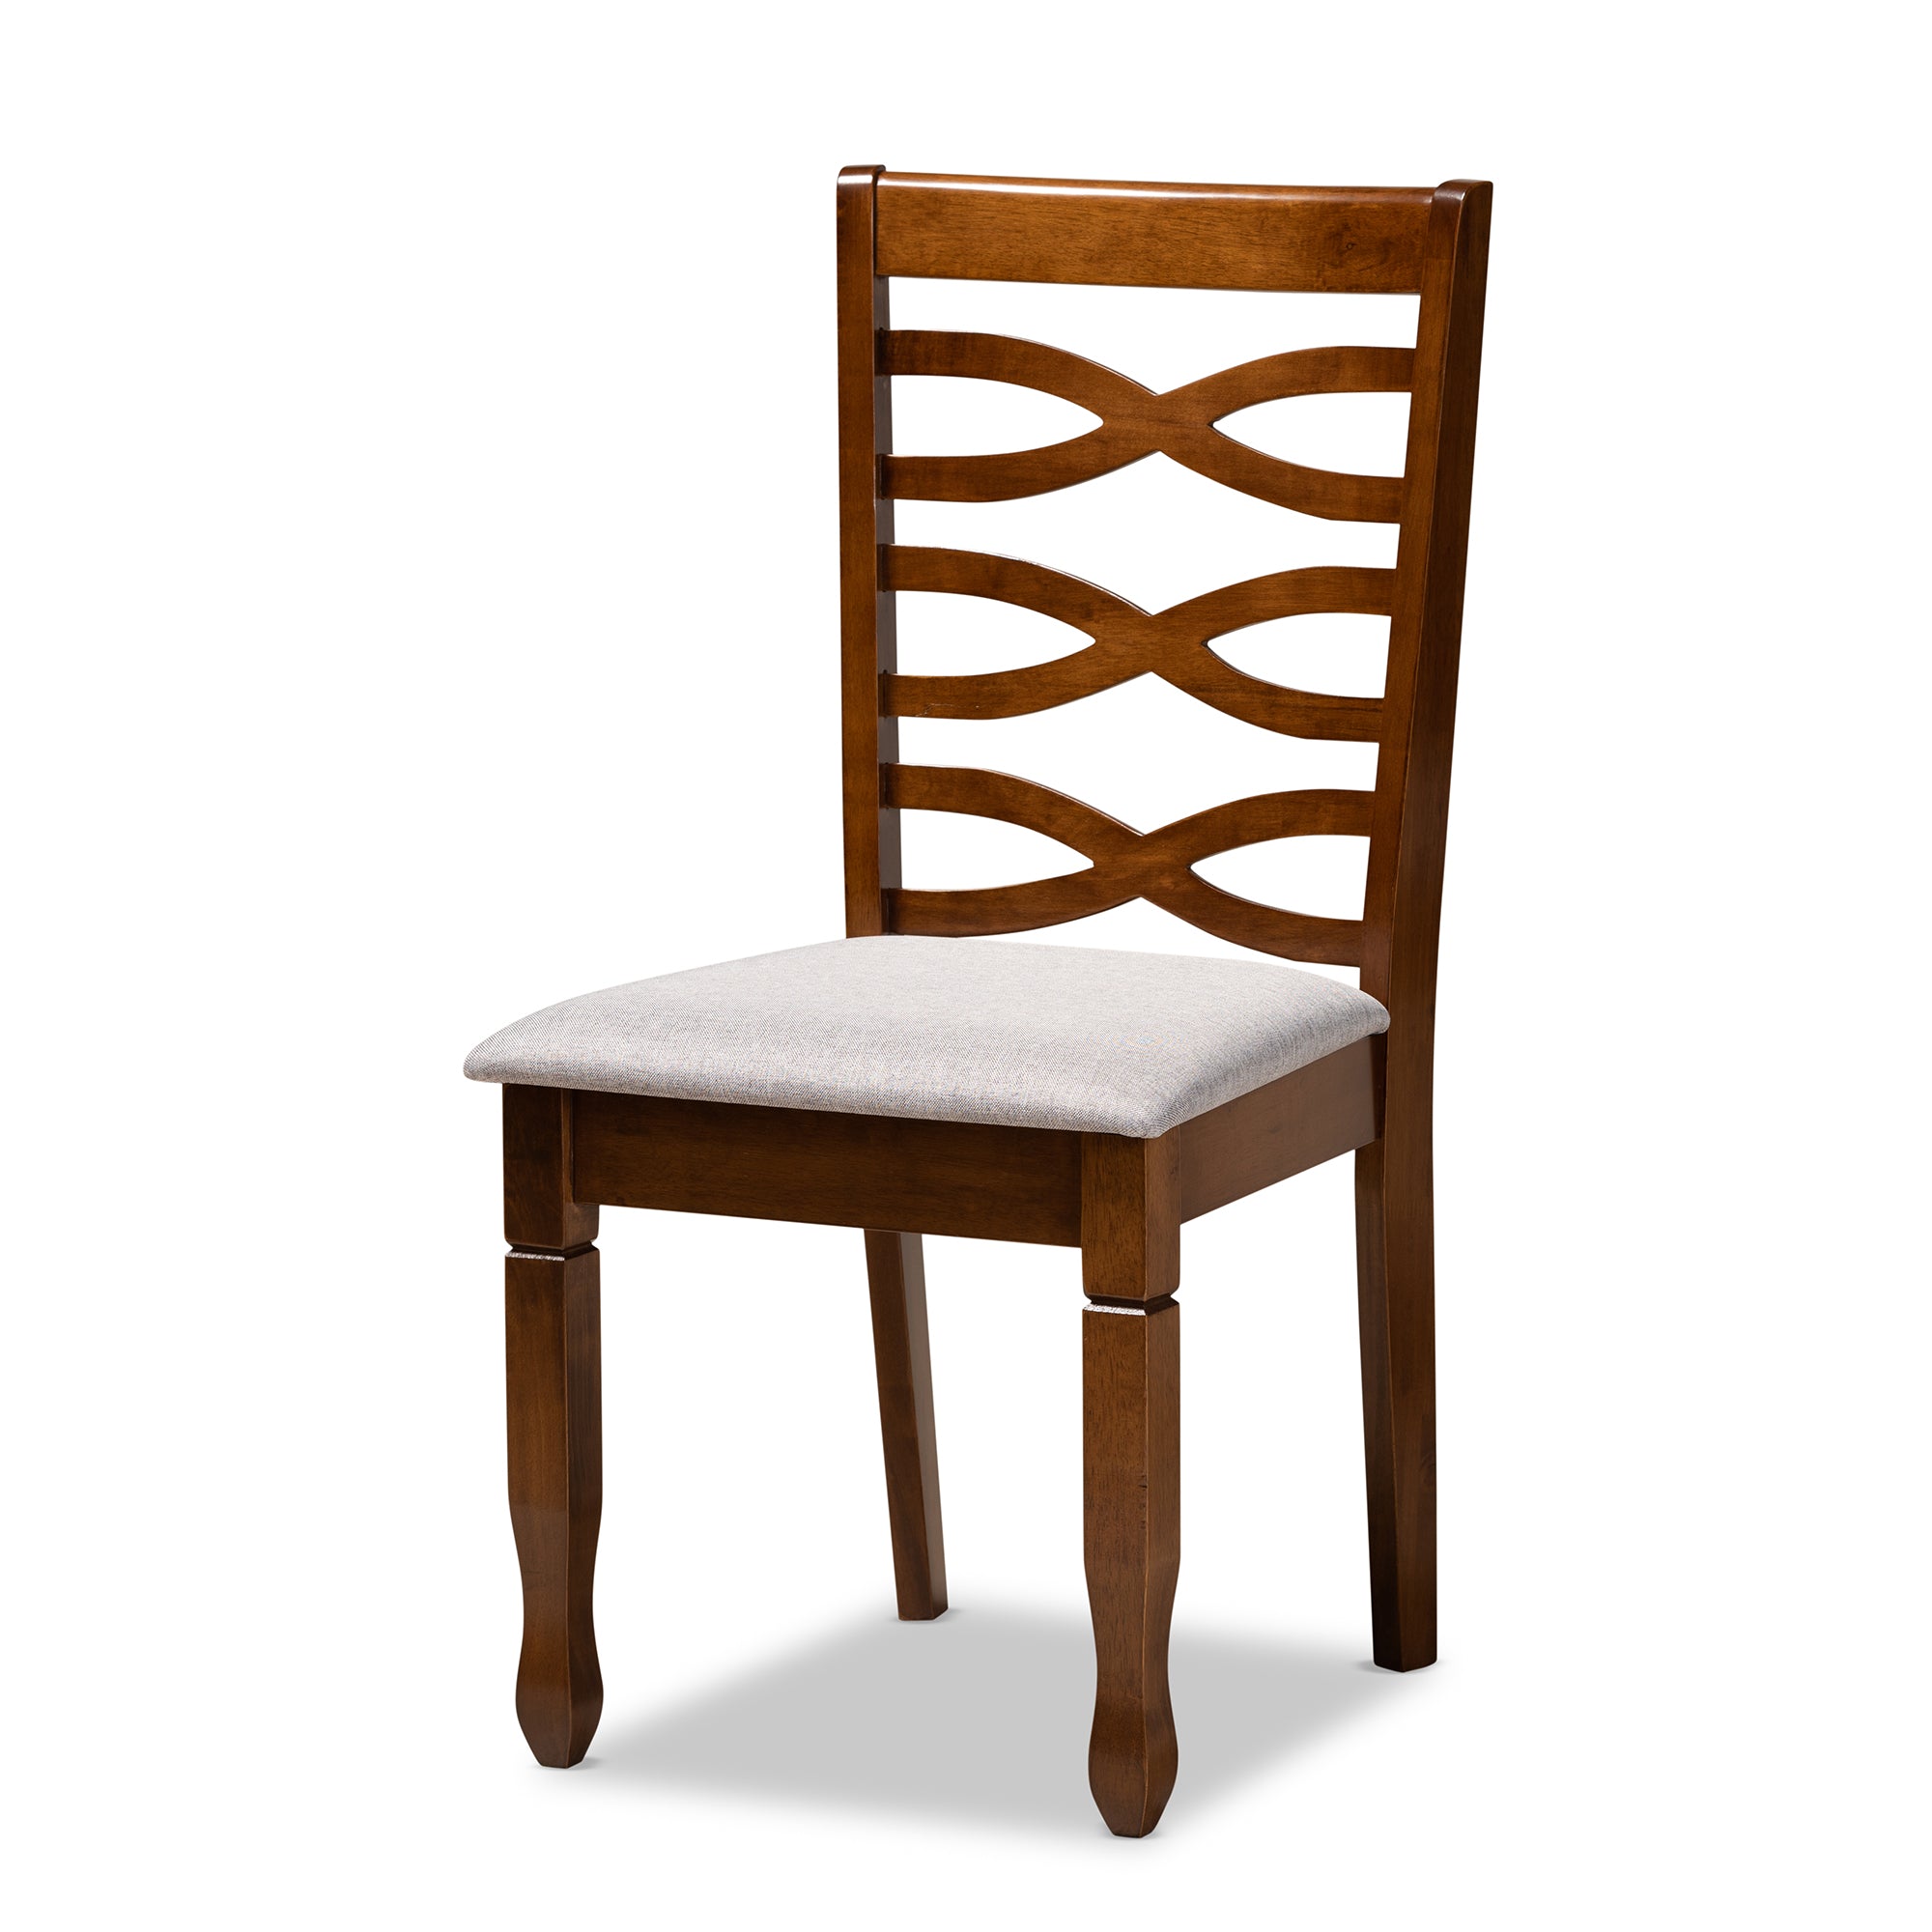 Mila Modern Table & Six (6) Dining Chairs 7-Piece-Dining Set-Baxton Studio - WI-Wall2Wall Furnishings